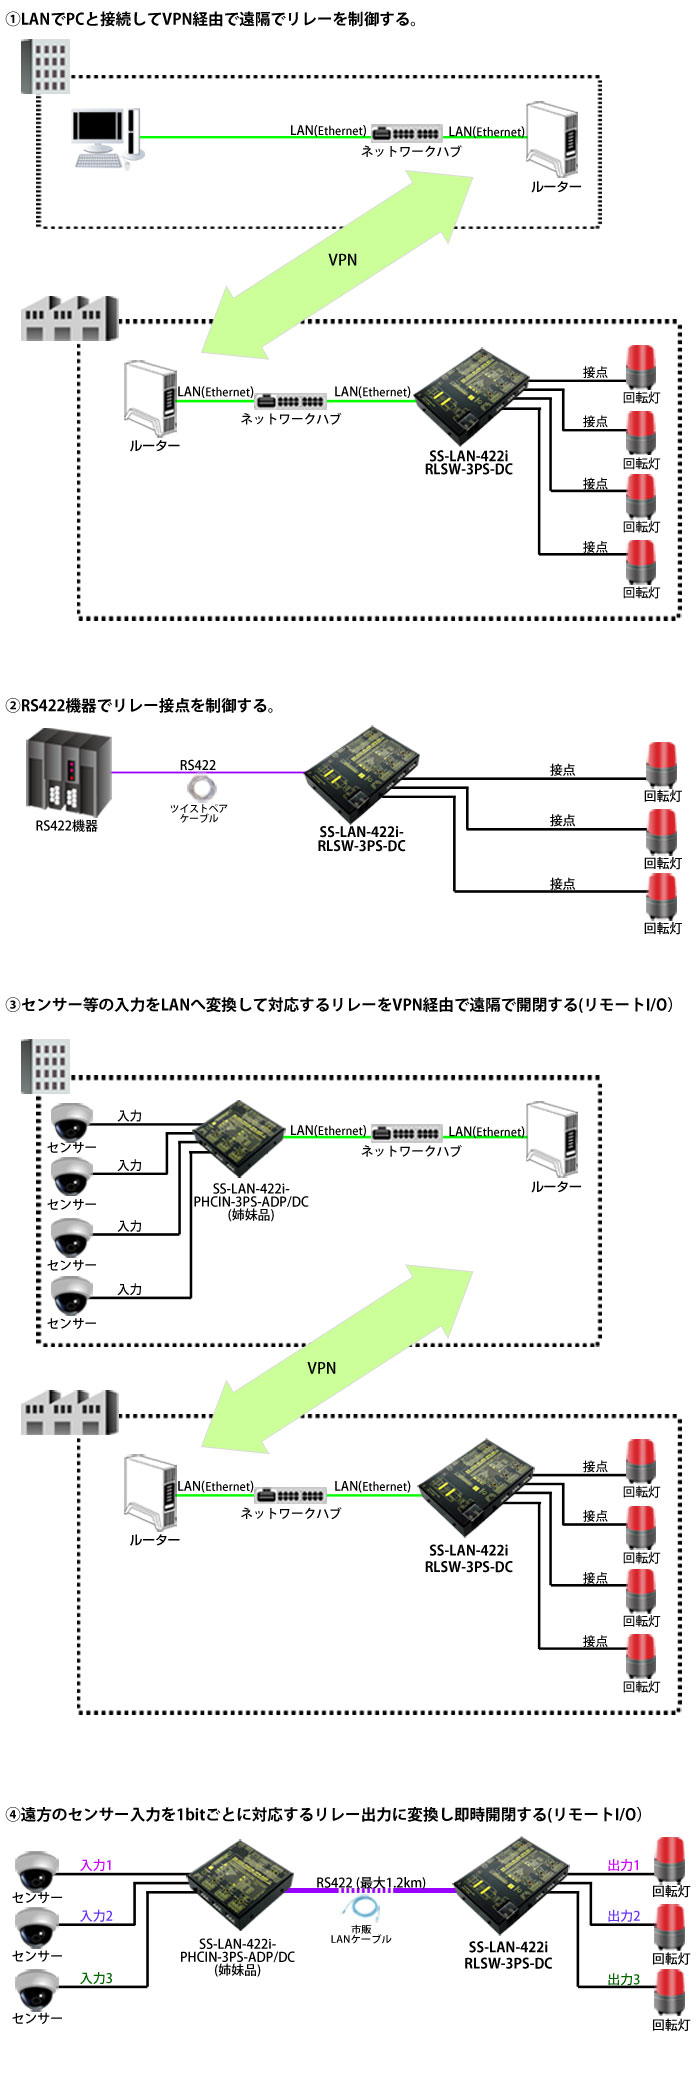 SS-LAN-422i-RLSW-3PS-DC製品情報｜シリアル信号変換器ならサコム